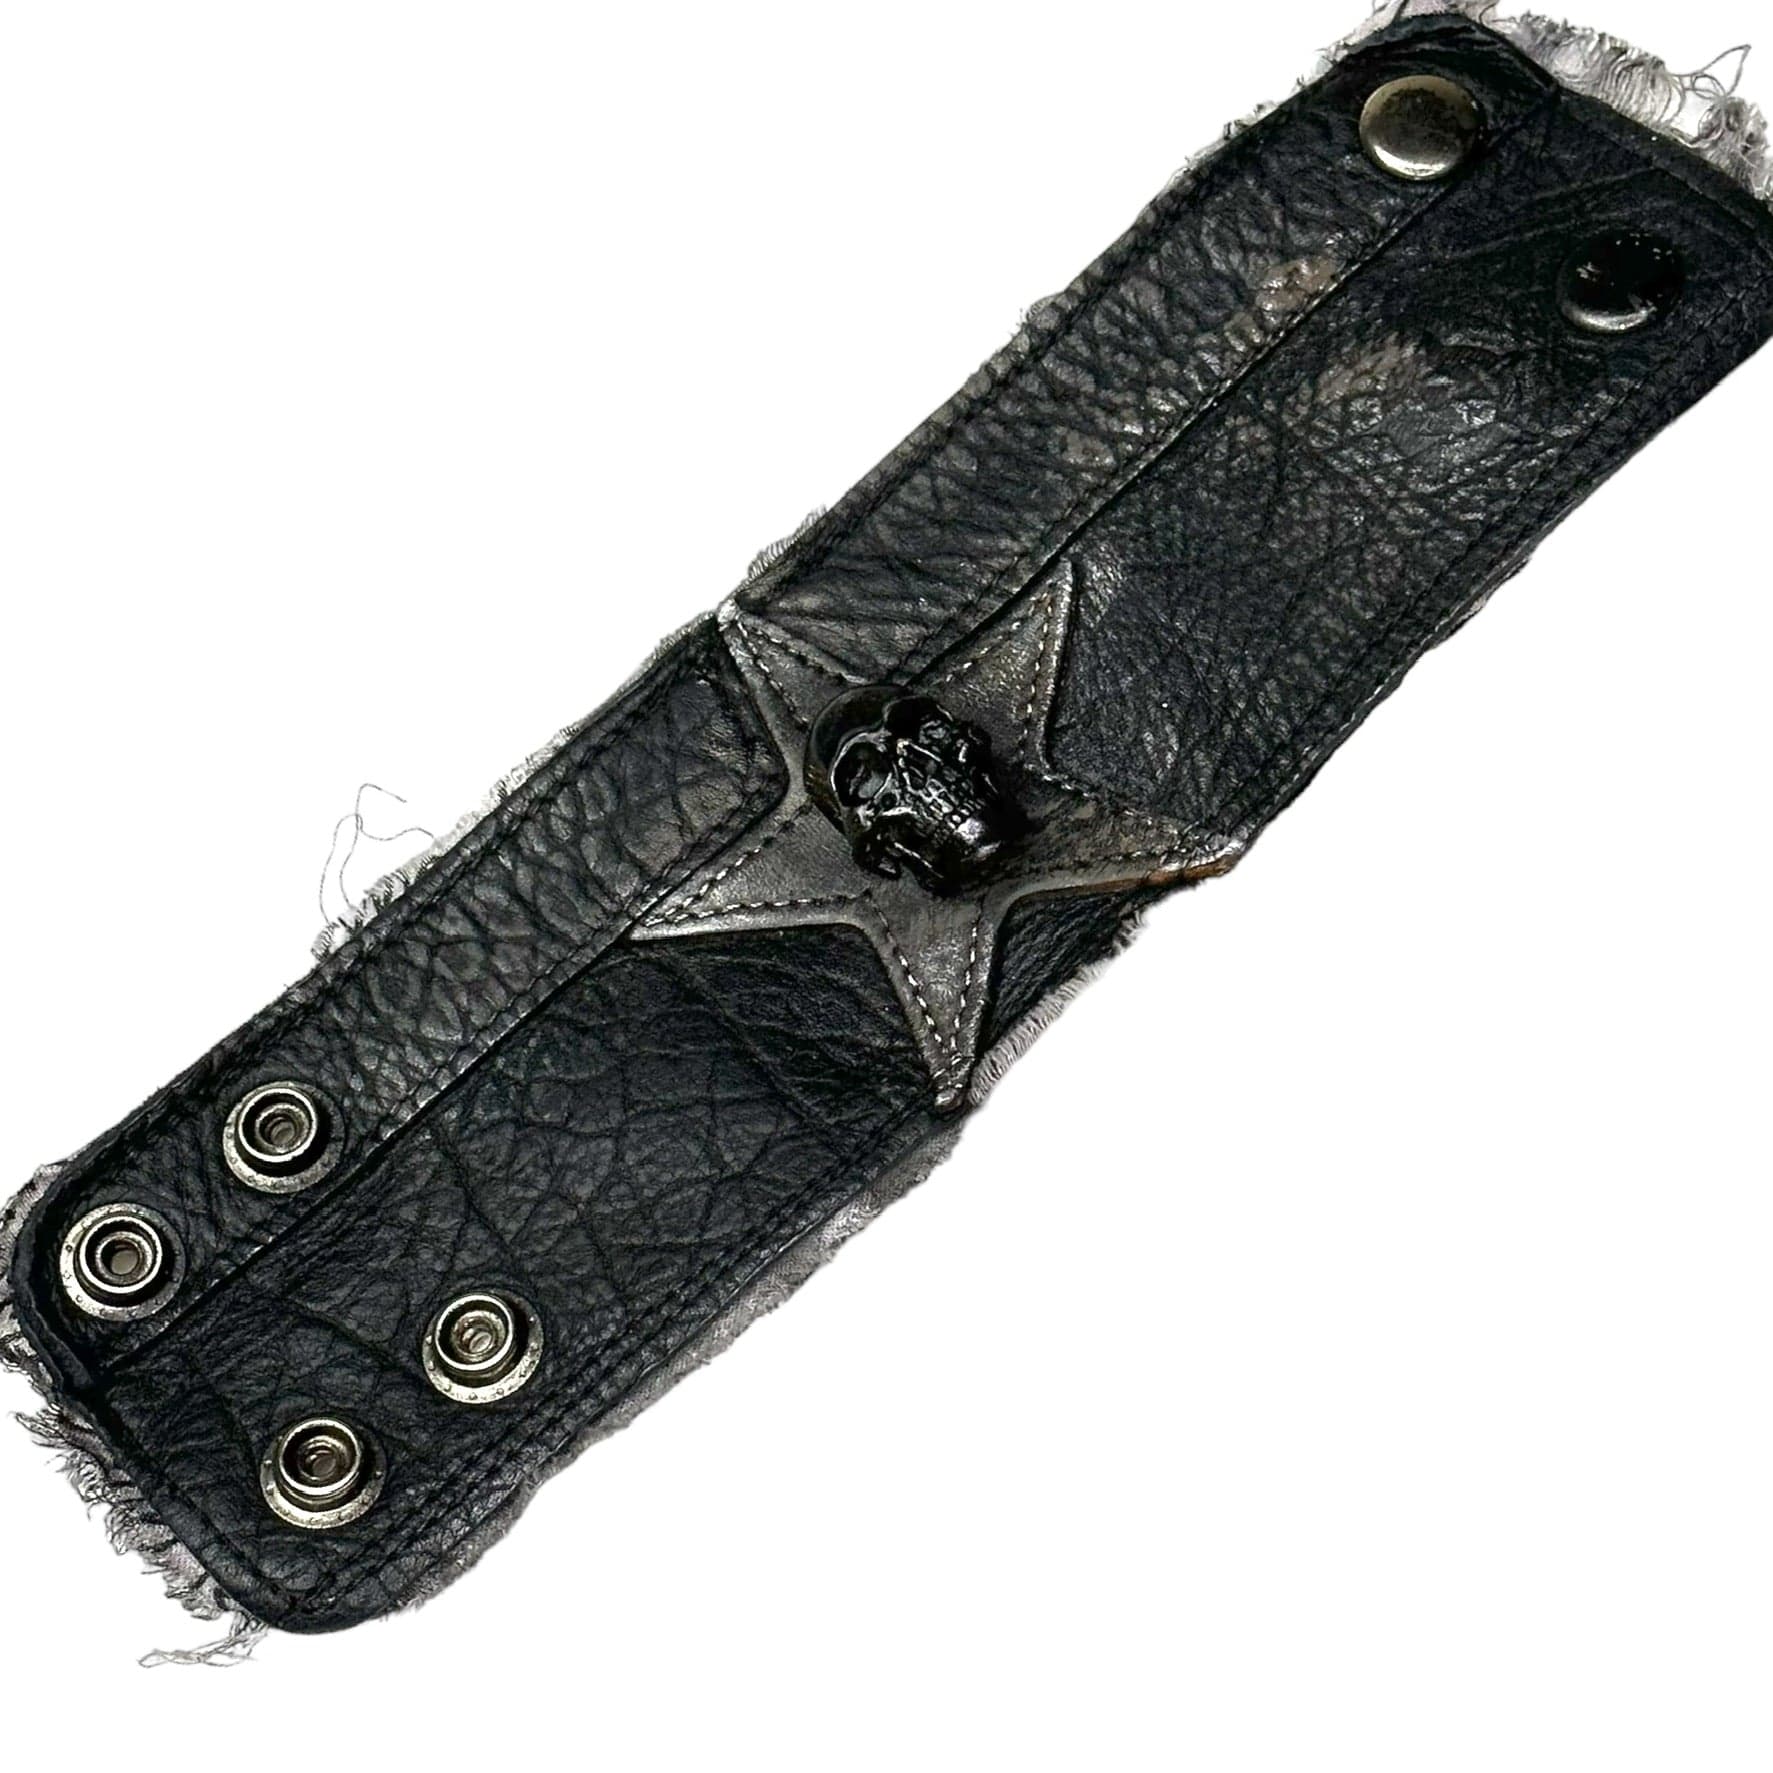 Man's custom magic band 2.0 on leather cuff.